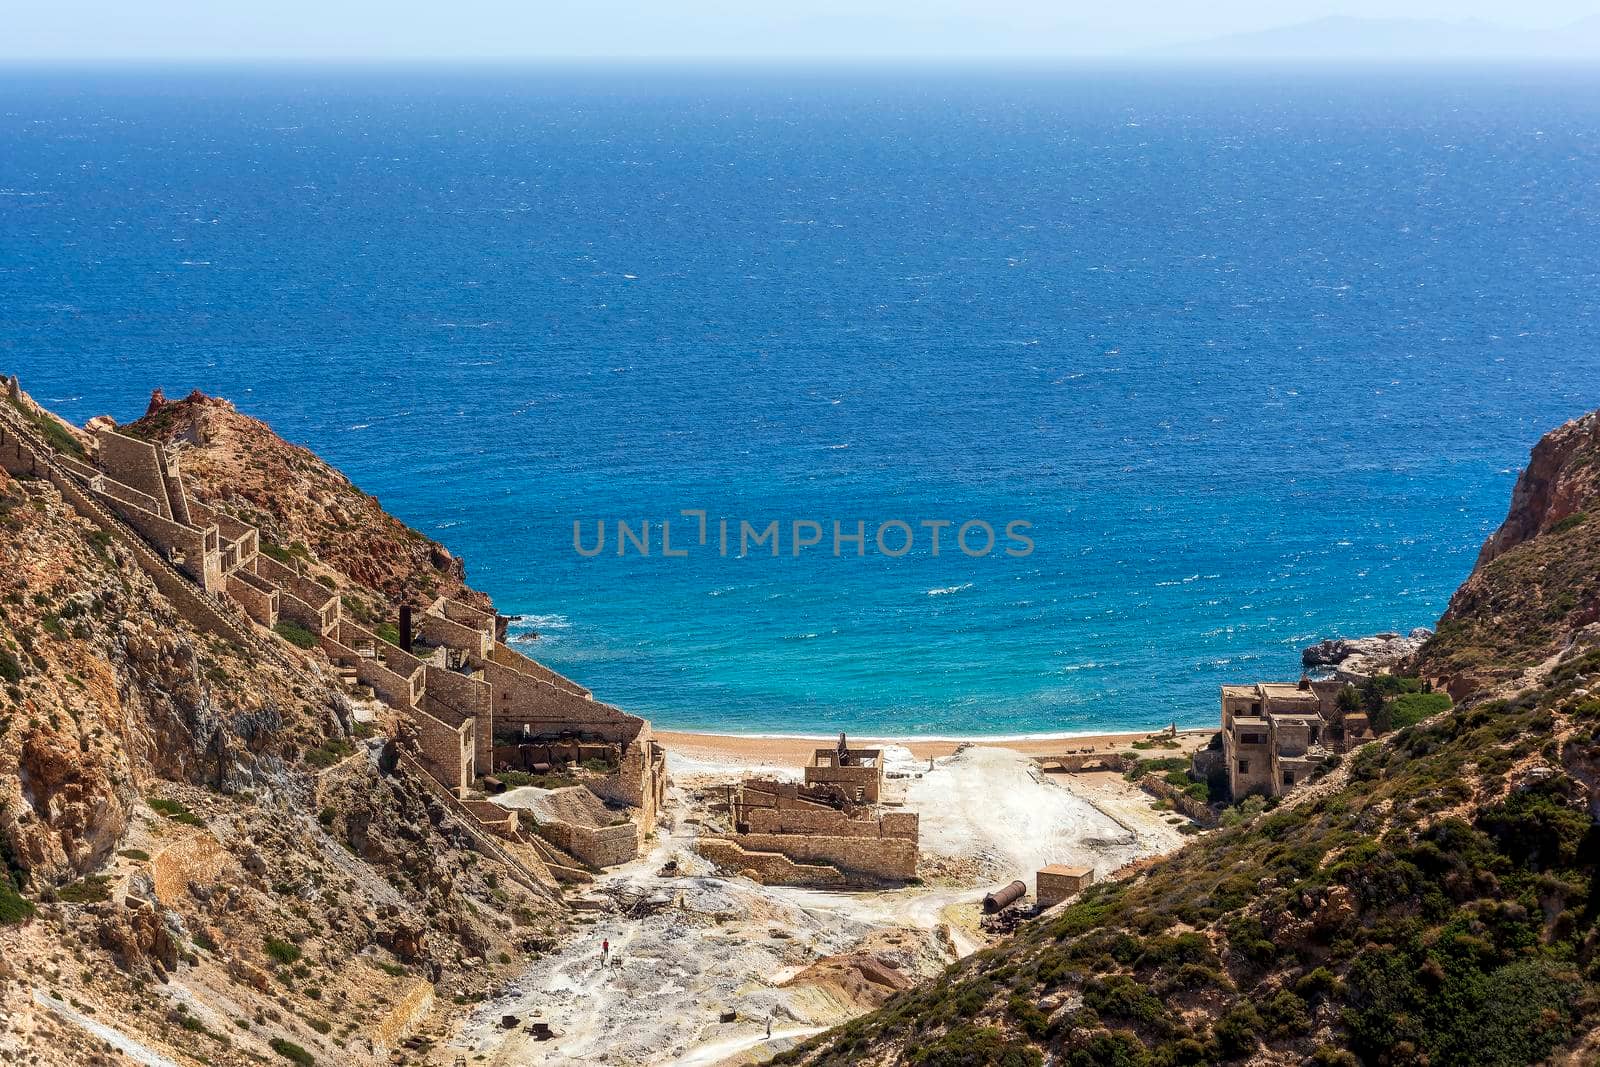 Beach near abandoned sulphur mines, Milos island, Cyclades, Greece by ankarb